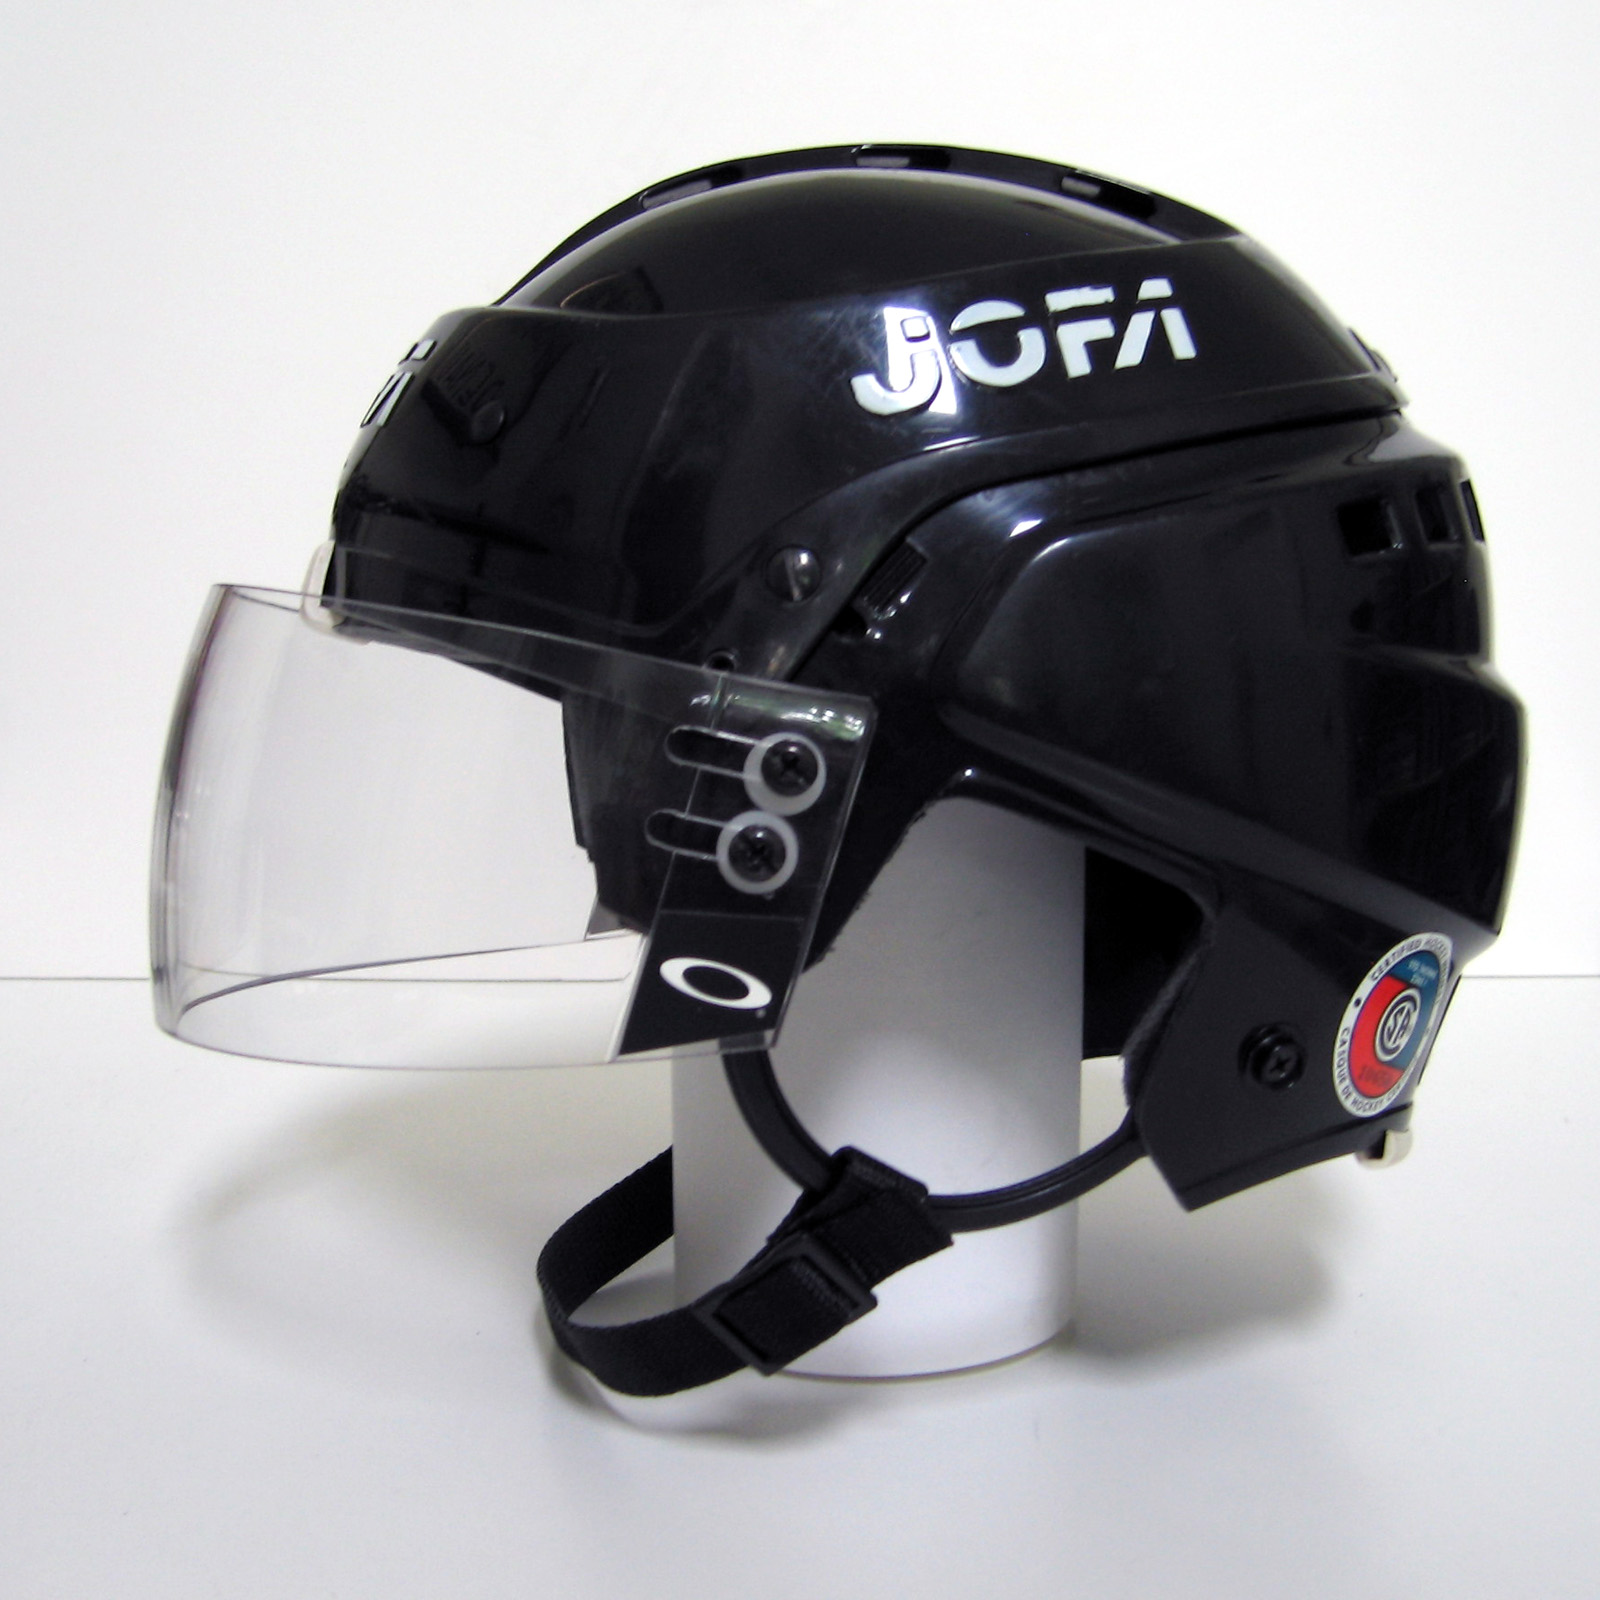 jofa-helmets-halos-of-hockey-teemu-selanne-jofa-390-366-modification